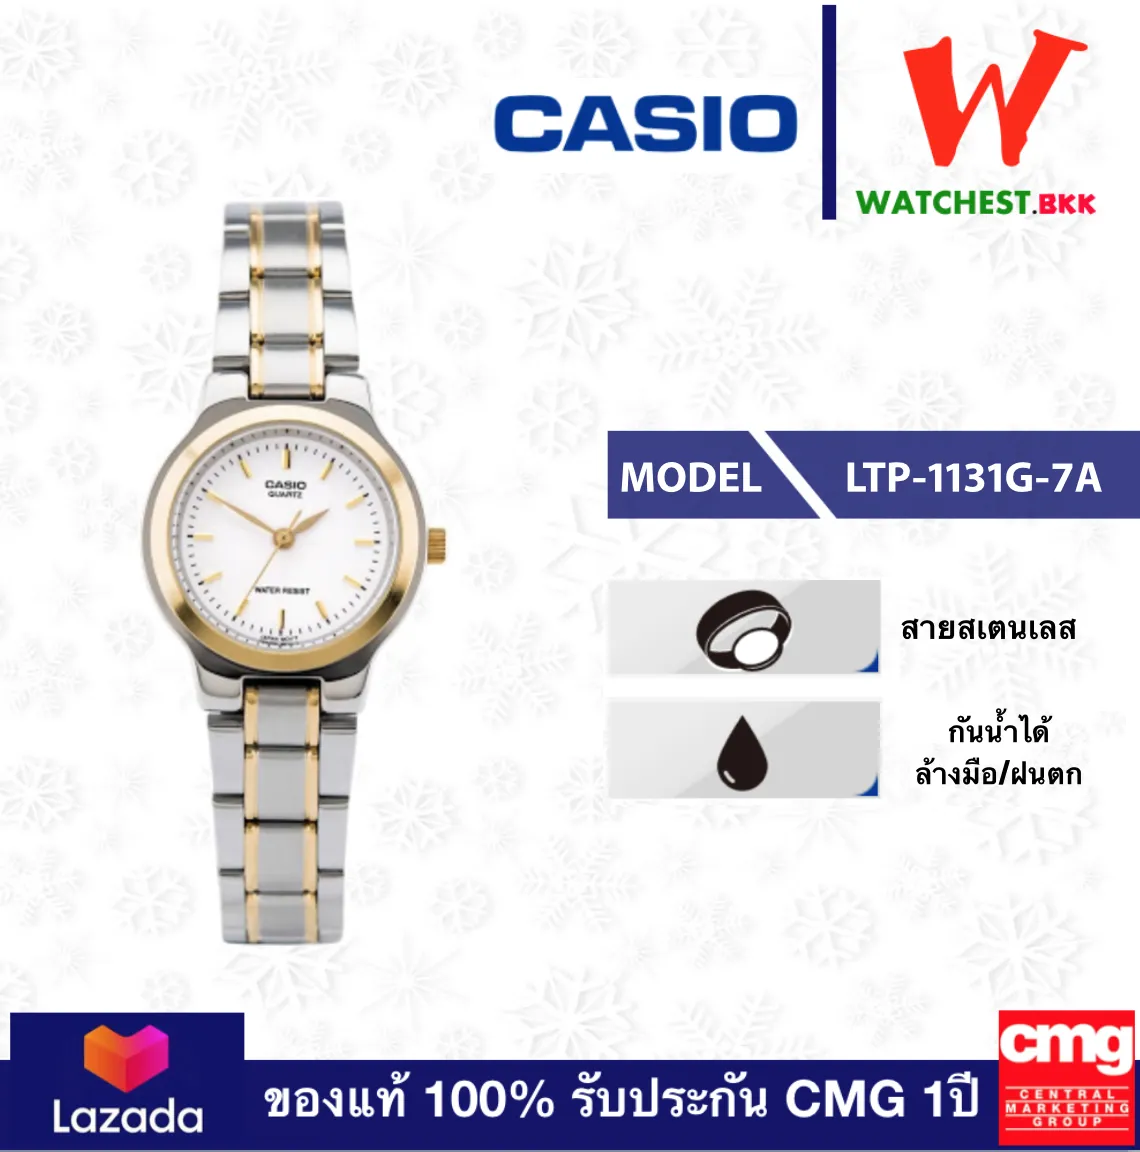 casio นาฬิกาผู้หญิง สายสเตนเลส รุ่น LTP-1131G-7A, คาสิโอ LTP1131, LTP-1131 สายเหล็ก ตัวล็อกบานพับ (watchestbkk คาสิโอ้ แท้ ของแท้100% ประกัน CMG)